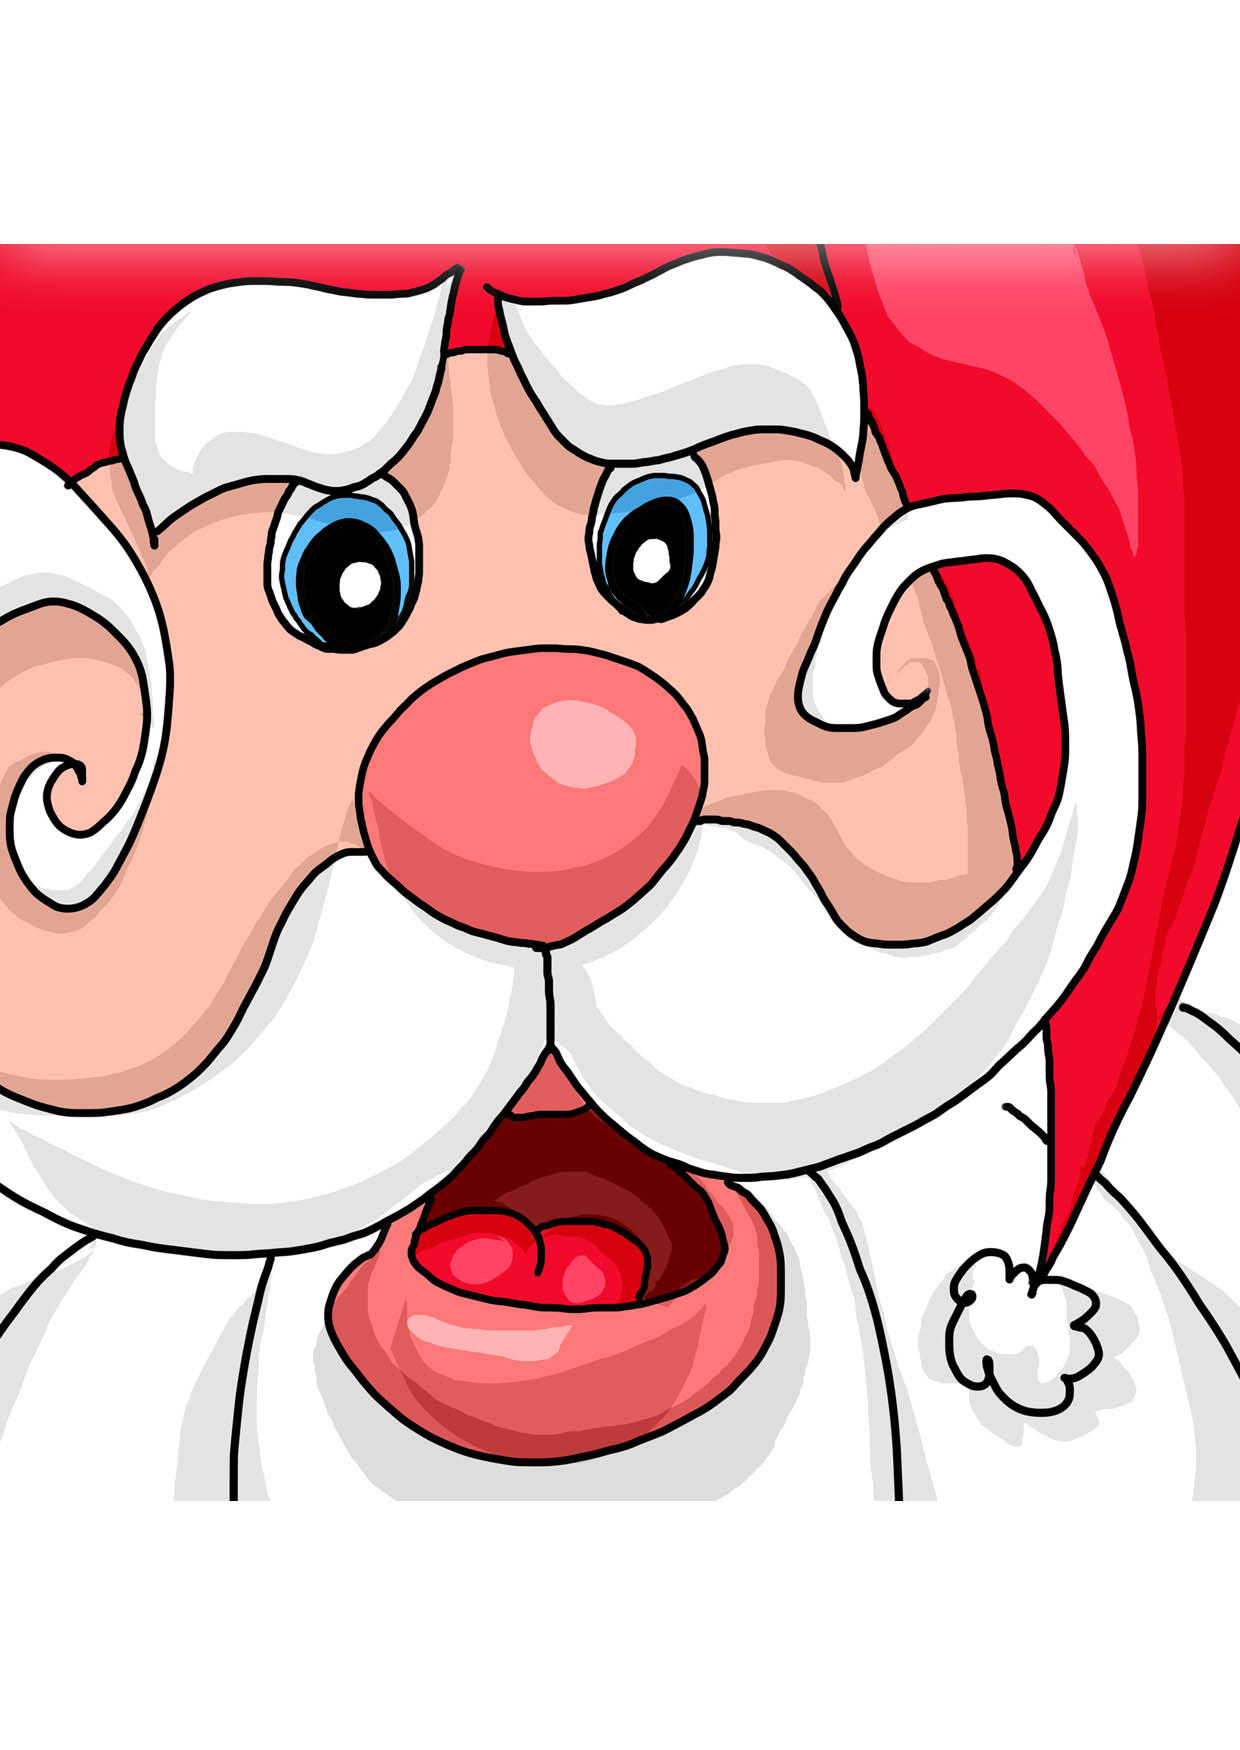 Image Santa Claus